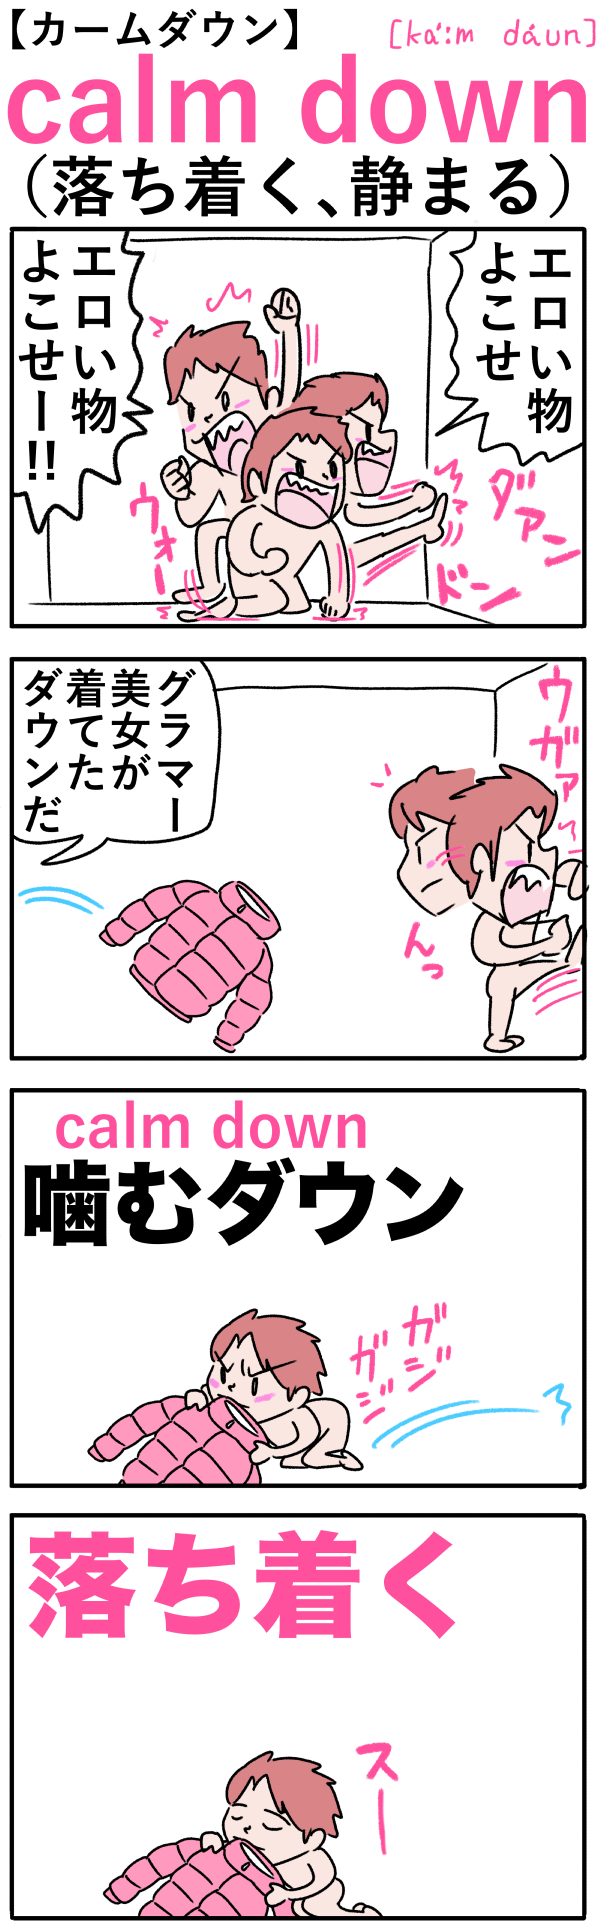 calm down（落ち着く）の語呂合わせ英単語